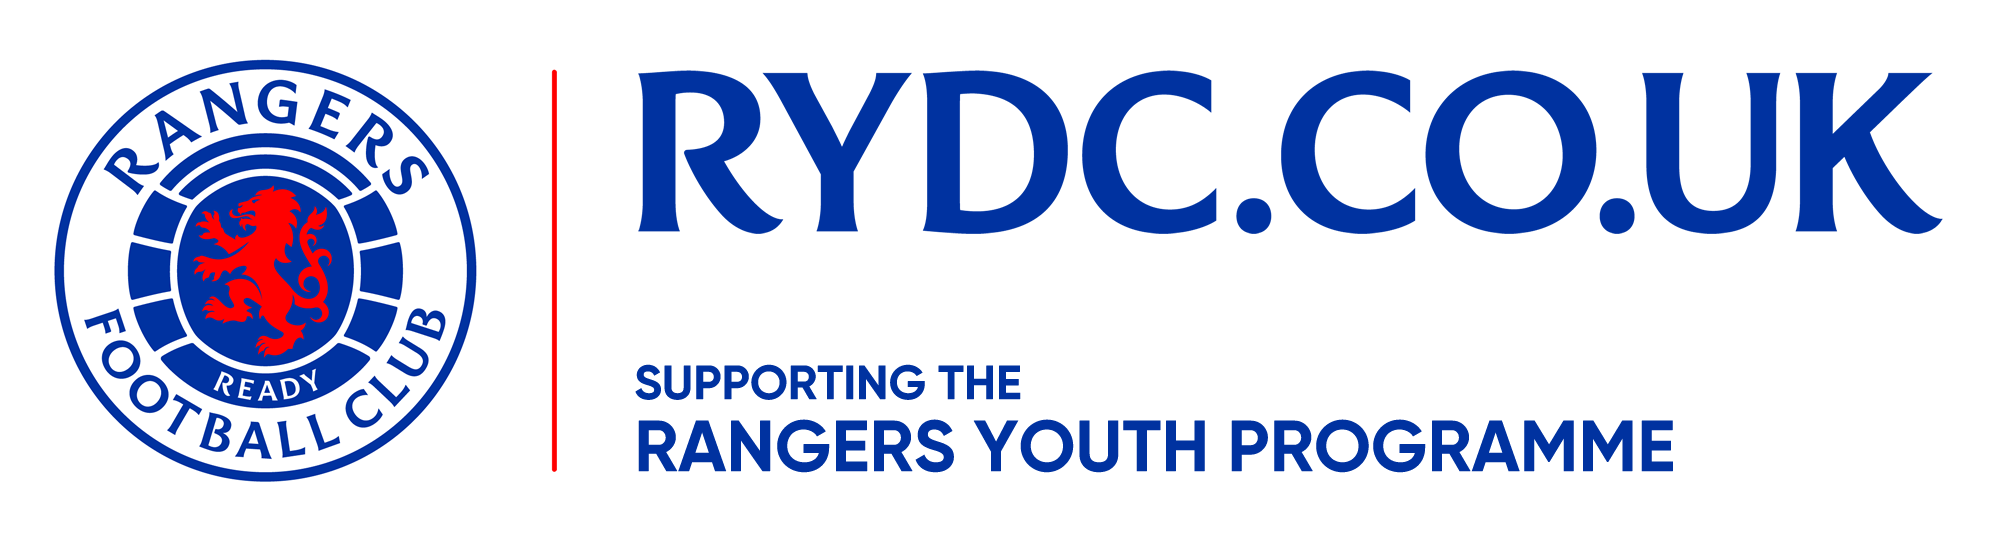 Rangers Youth Development Company